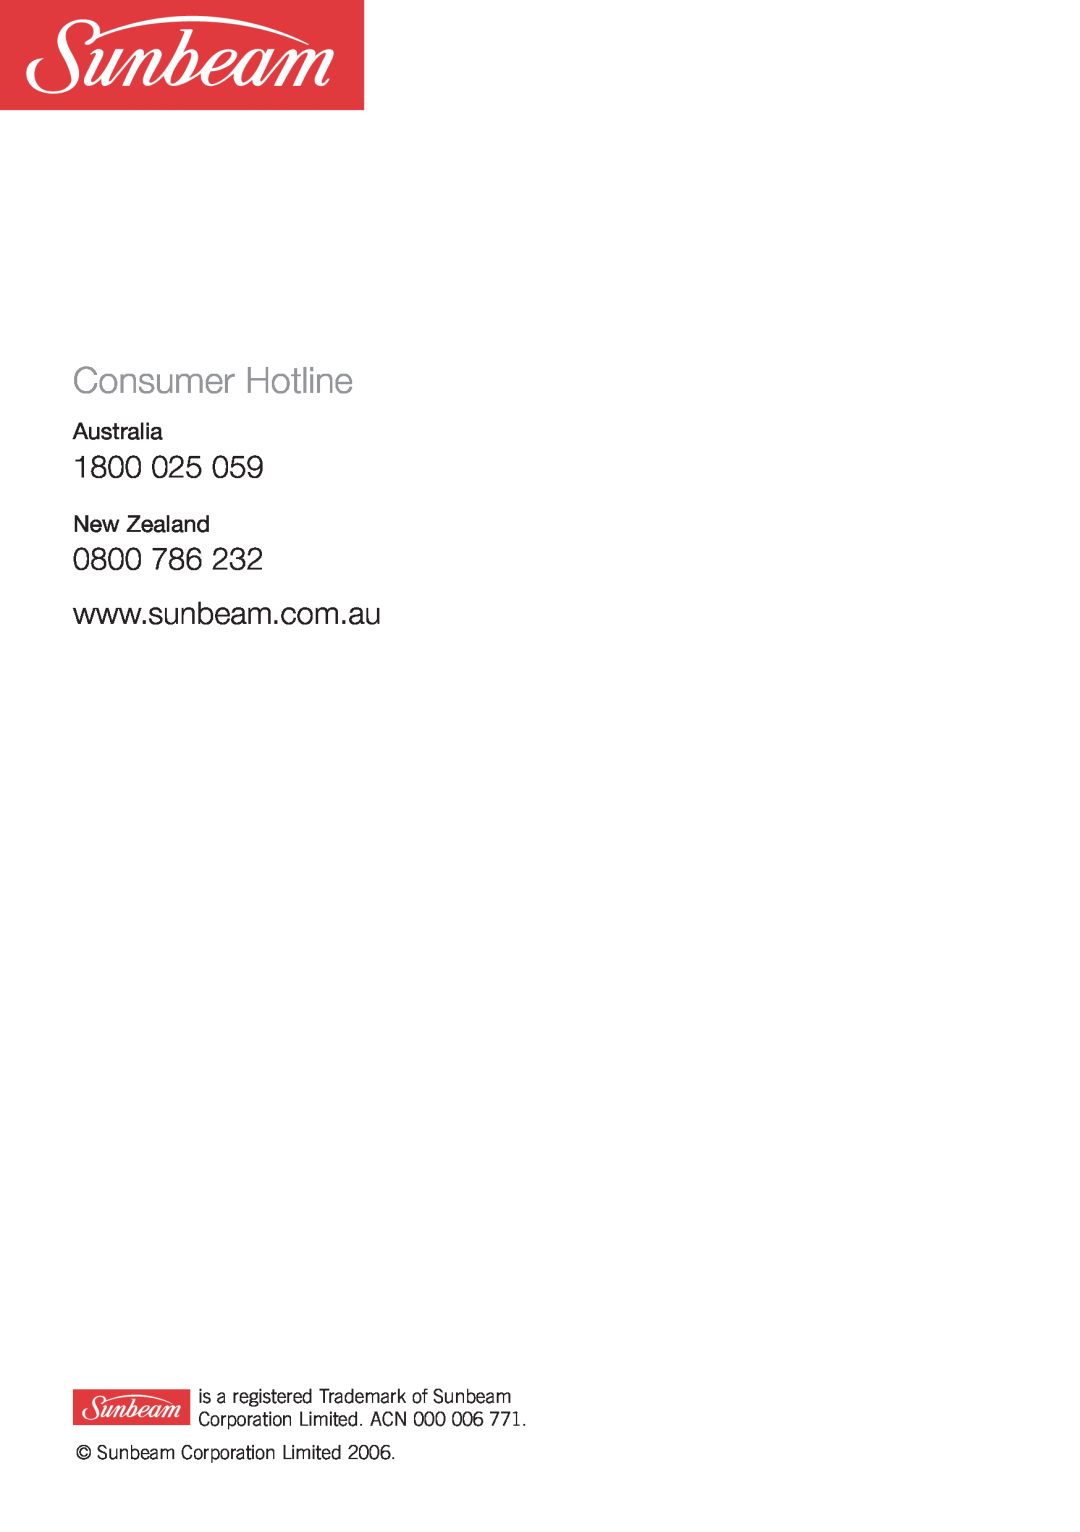 Sunbeam KE6300 manual 1800, Consumer Hotline, Australia, New Zealand 